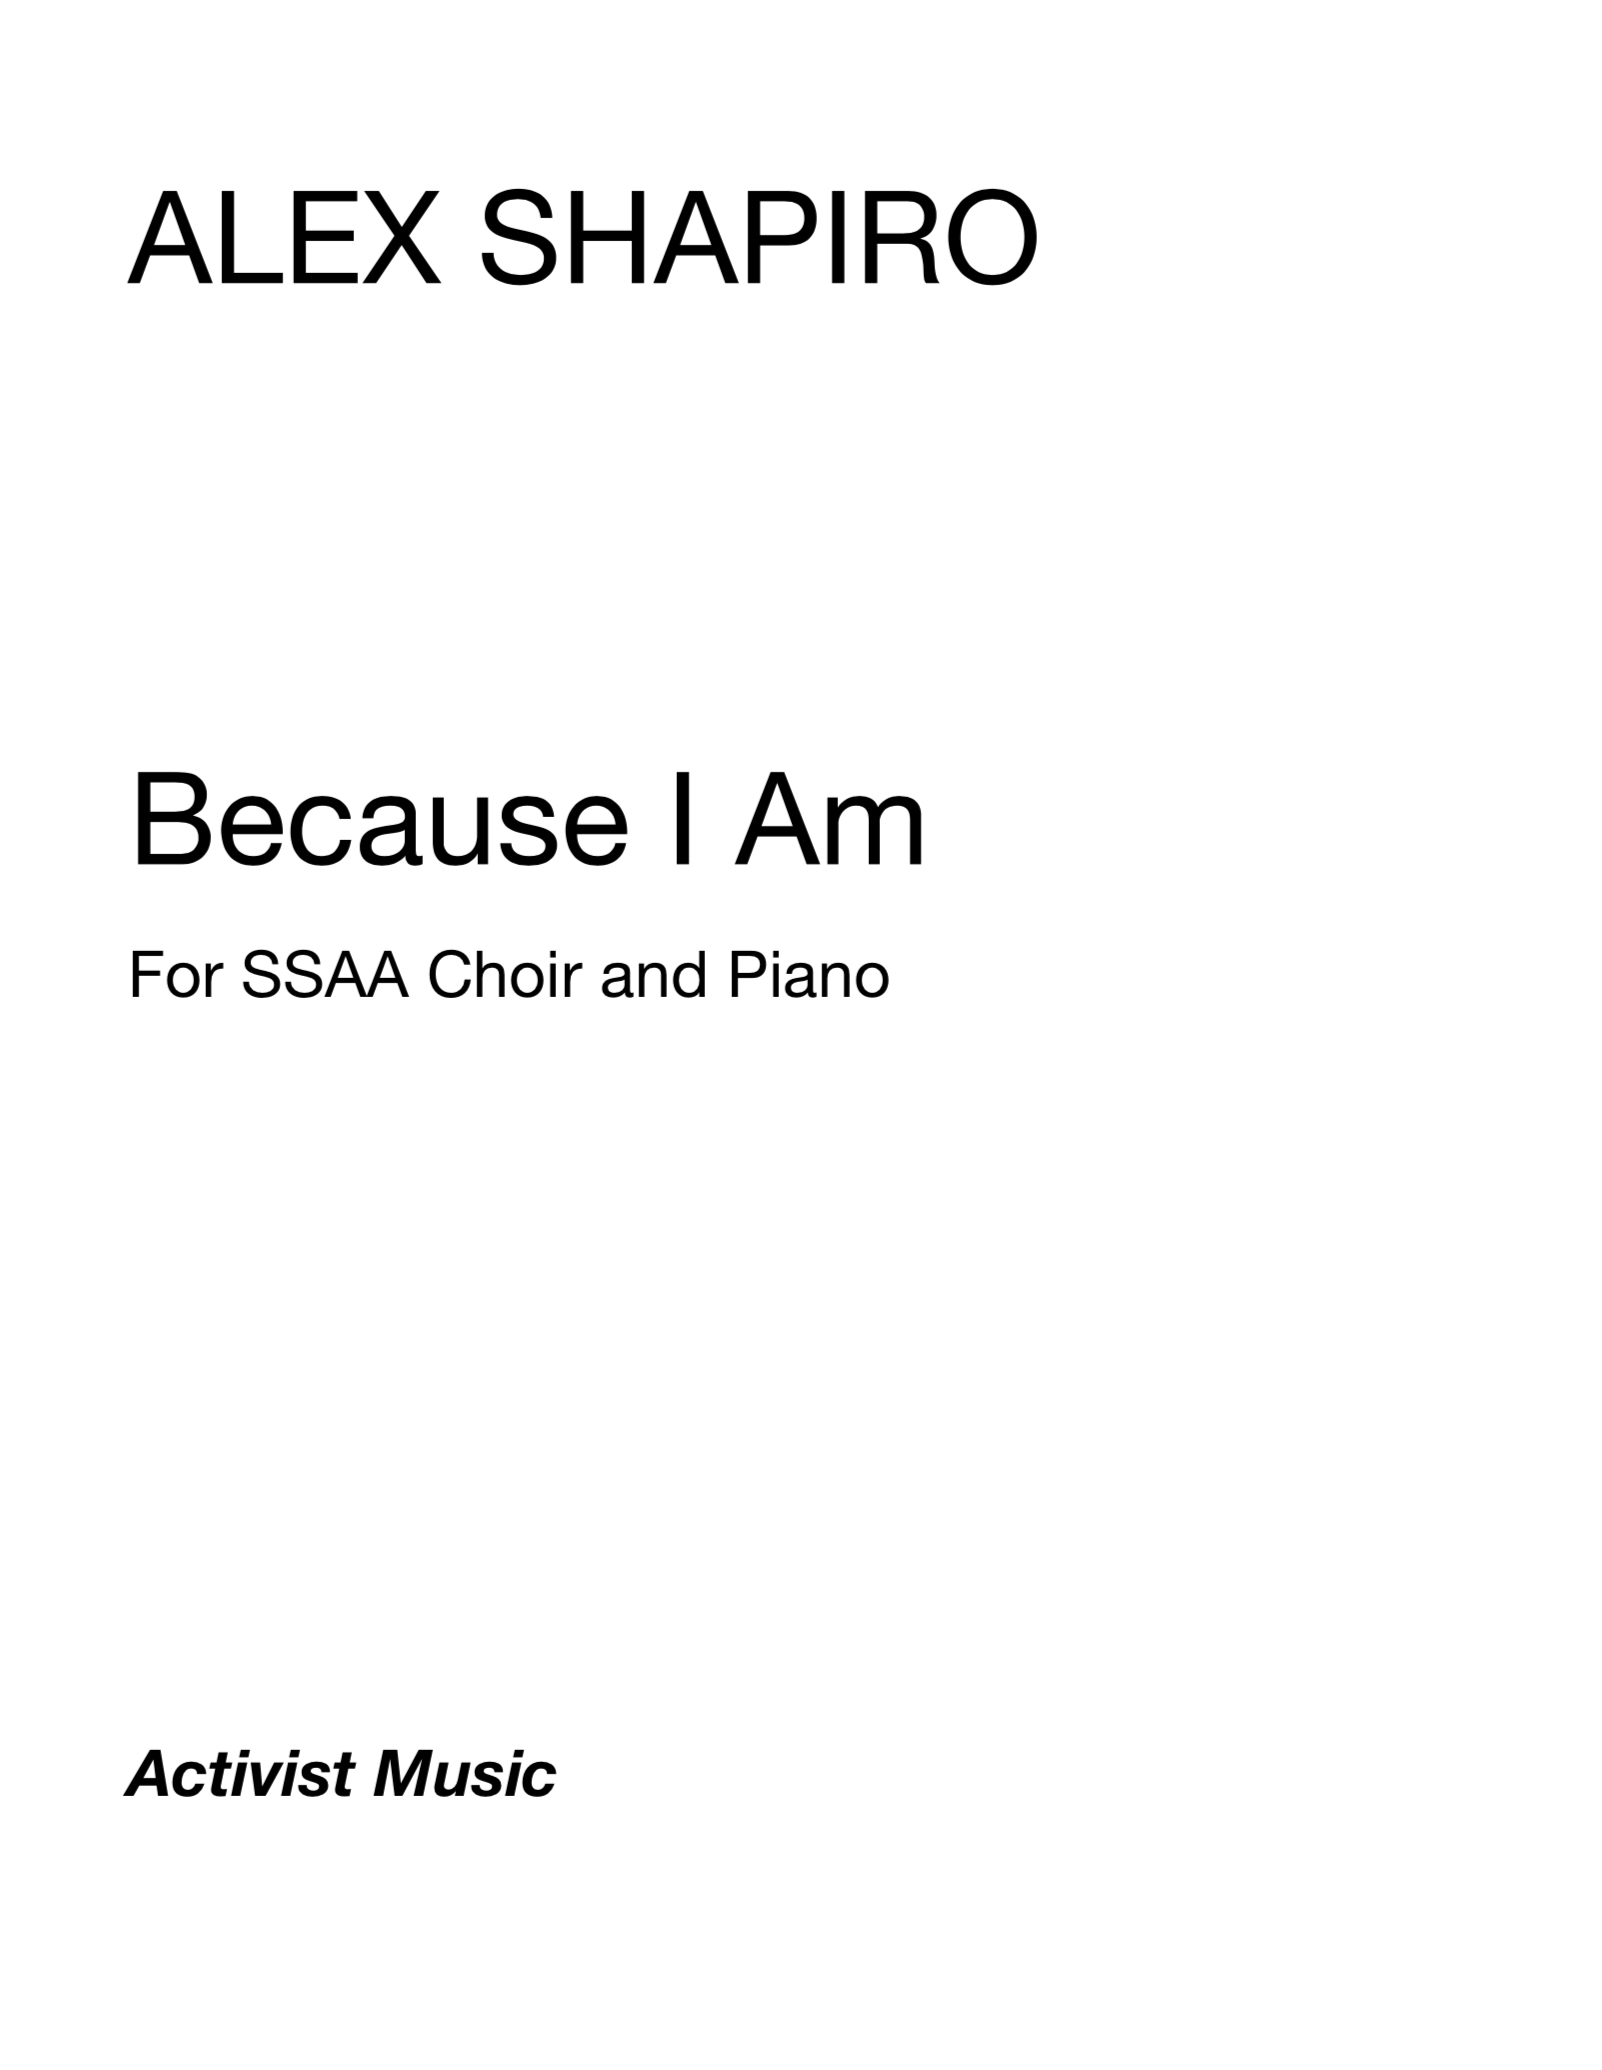 Because I Am by Alex Shapiro